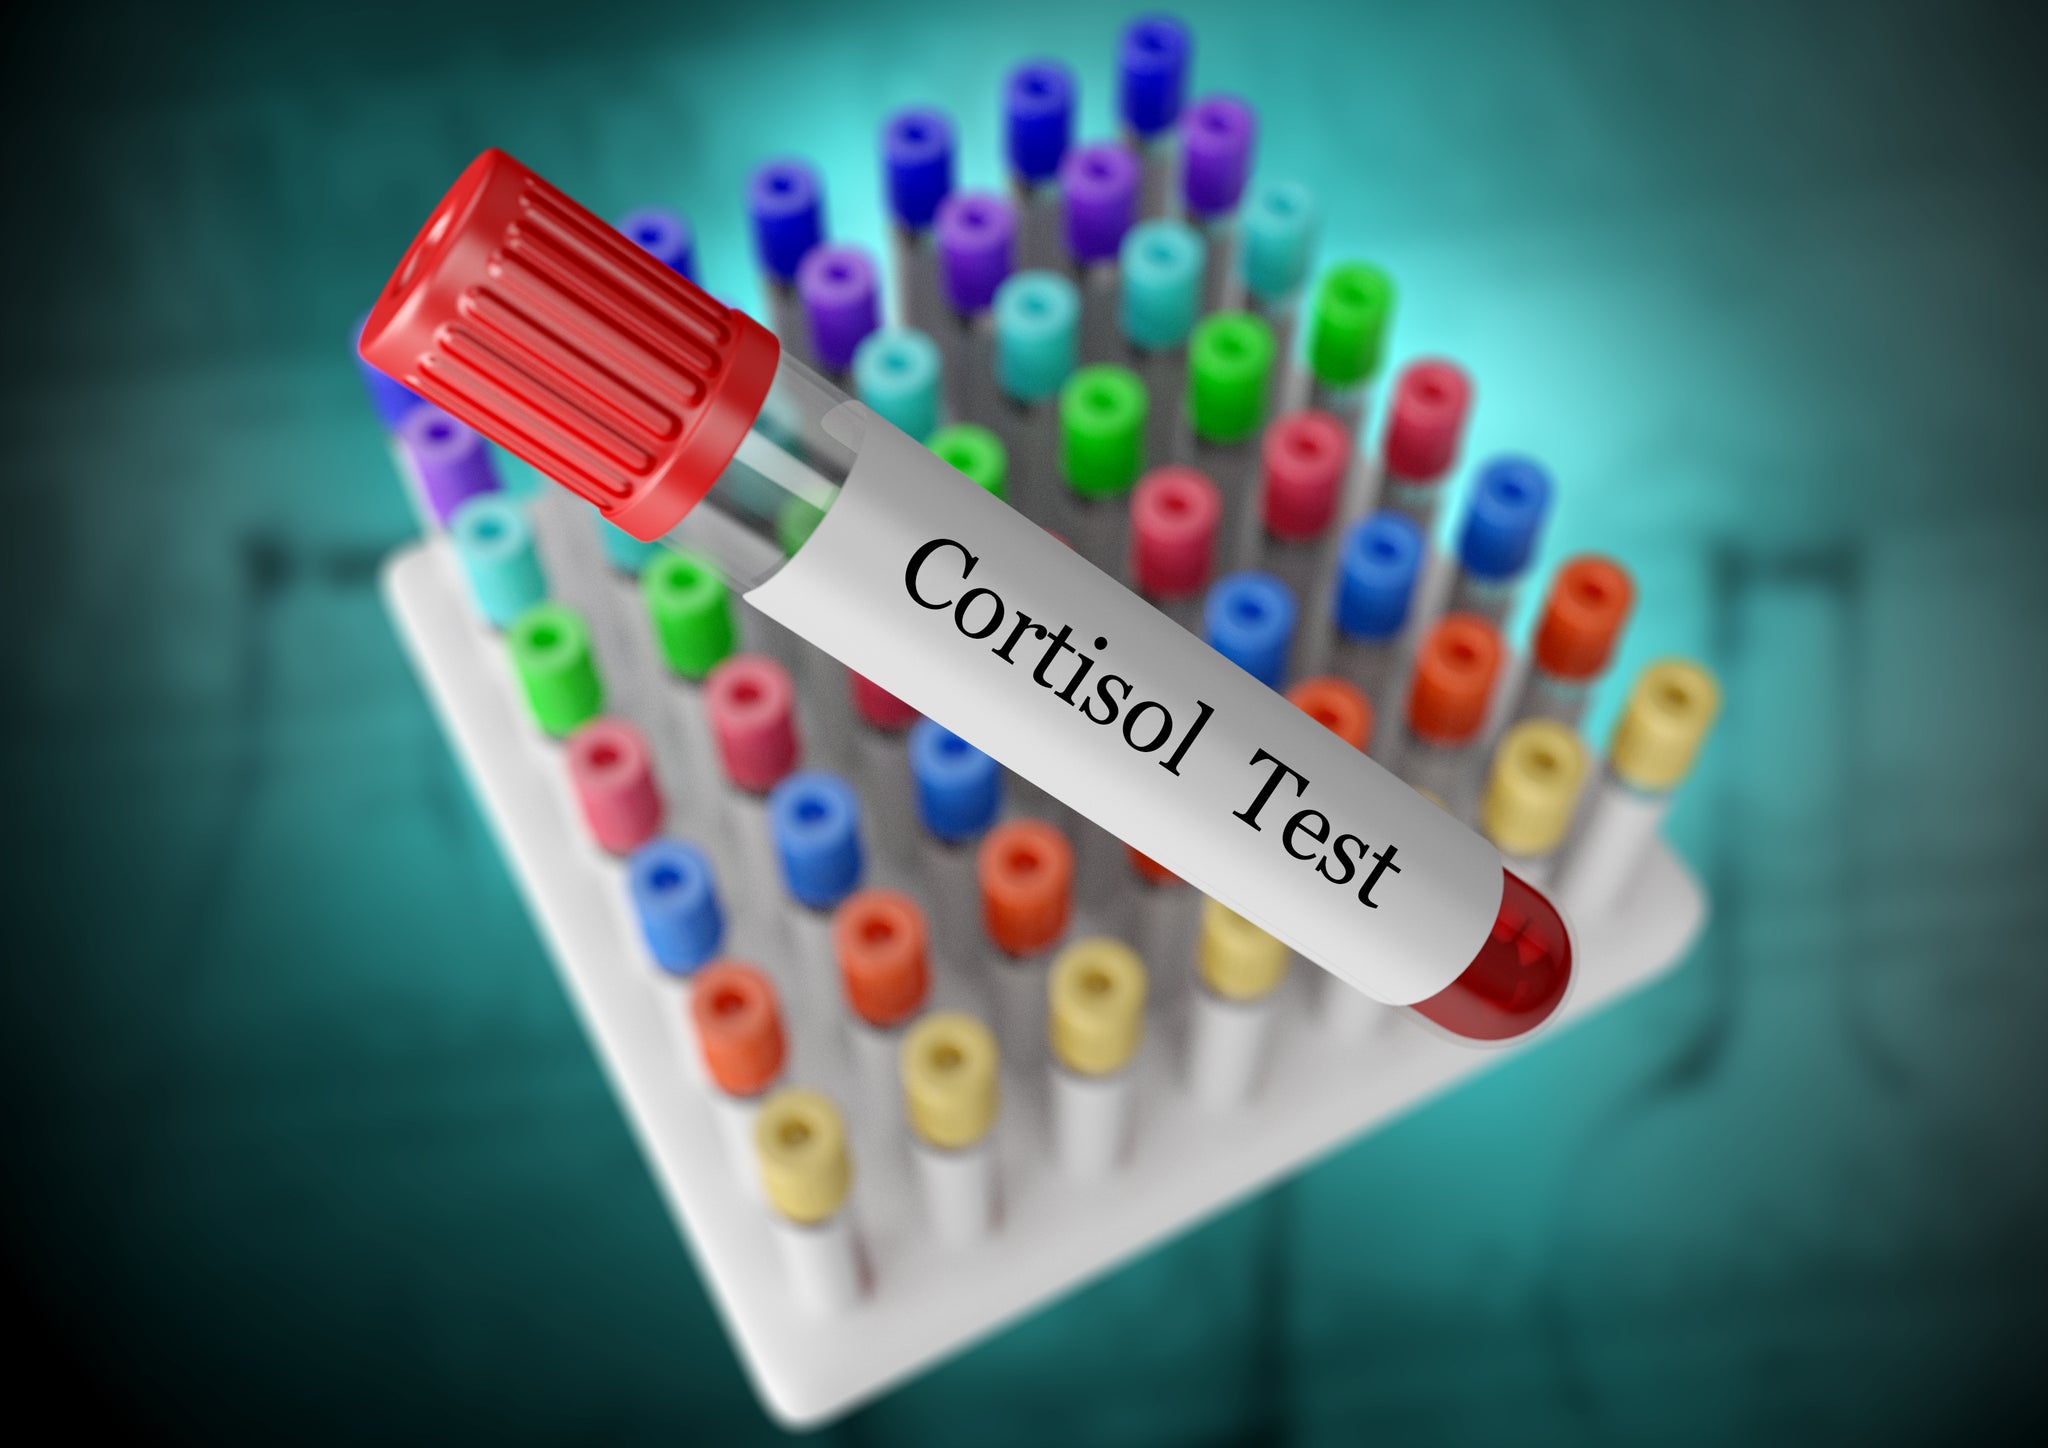 Cortisol Test tube 